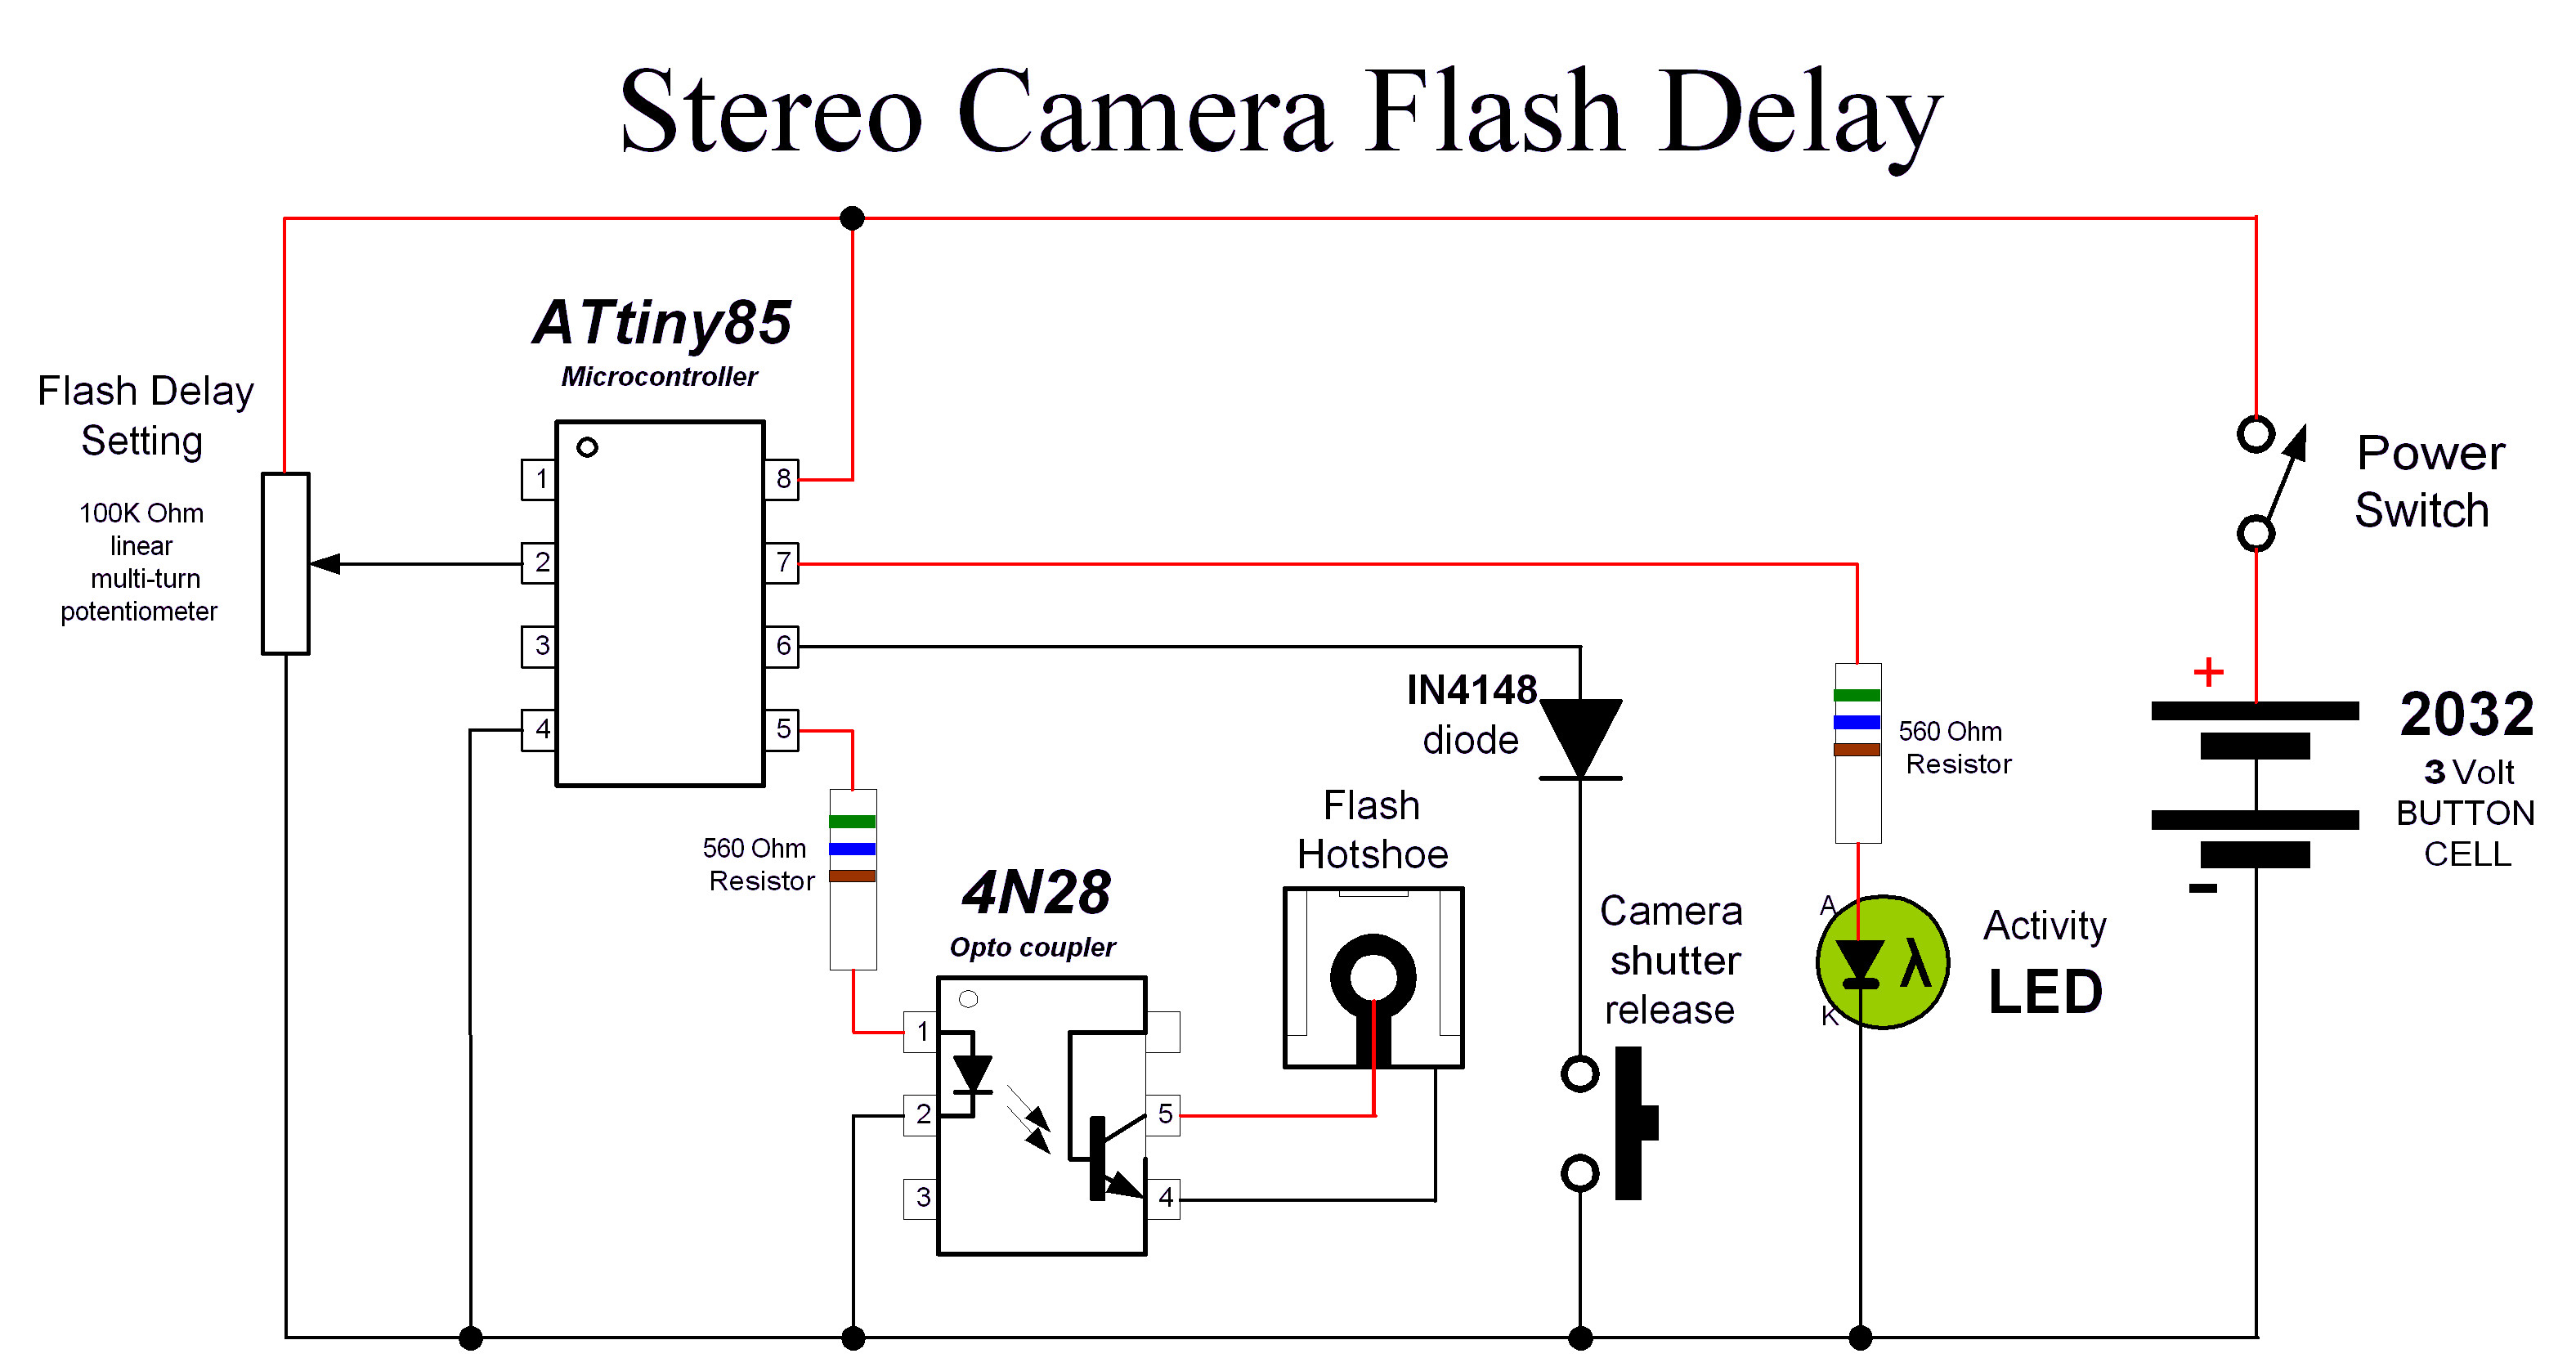 Stereo Camera flash delay circuit